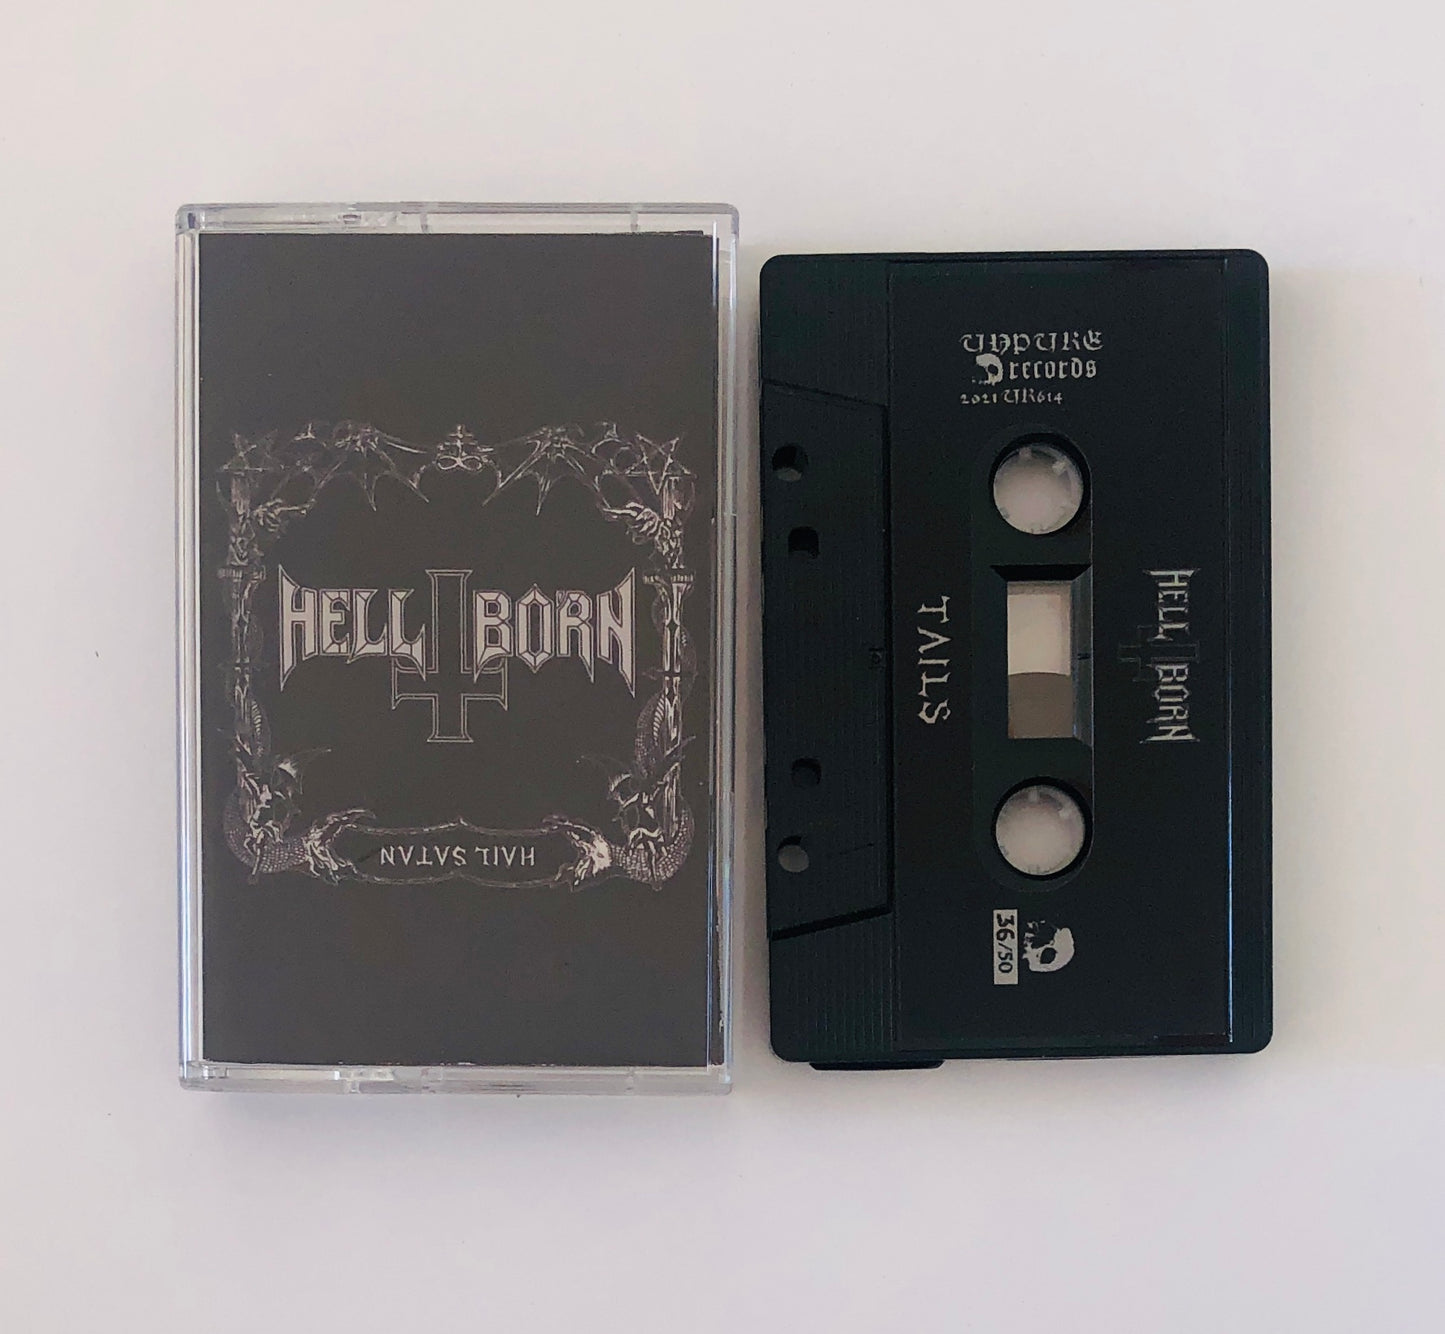 Hell-Born (Pol) "Natas Liah" - Pro Tape